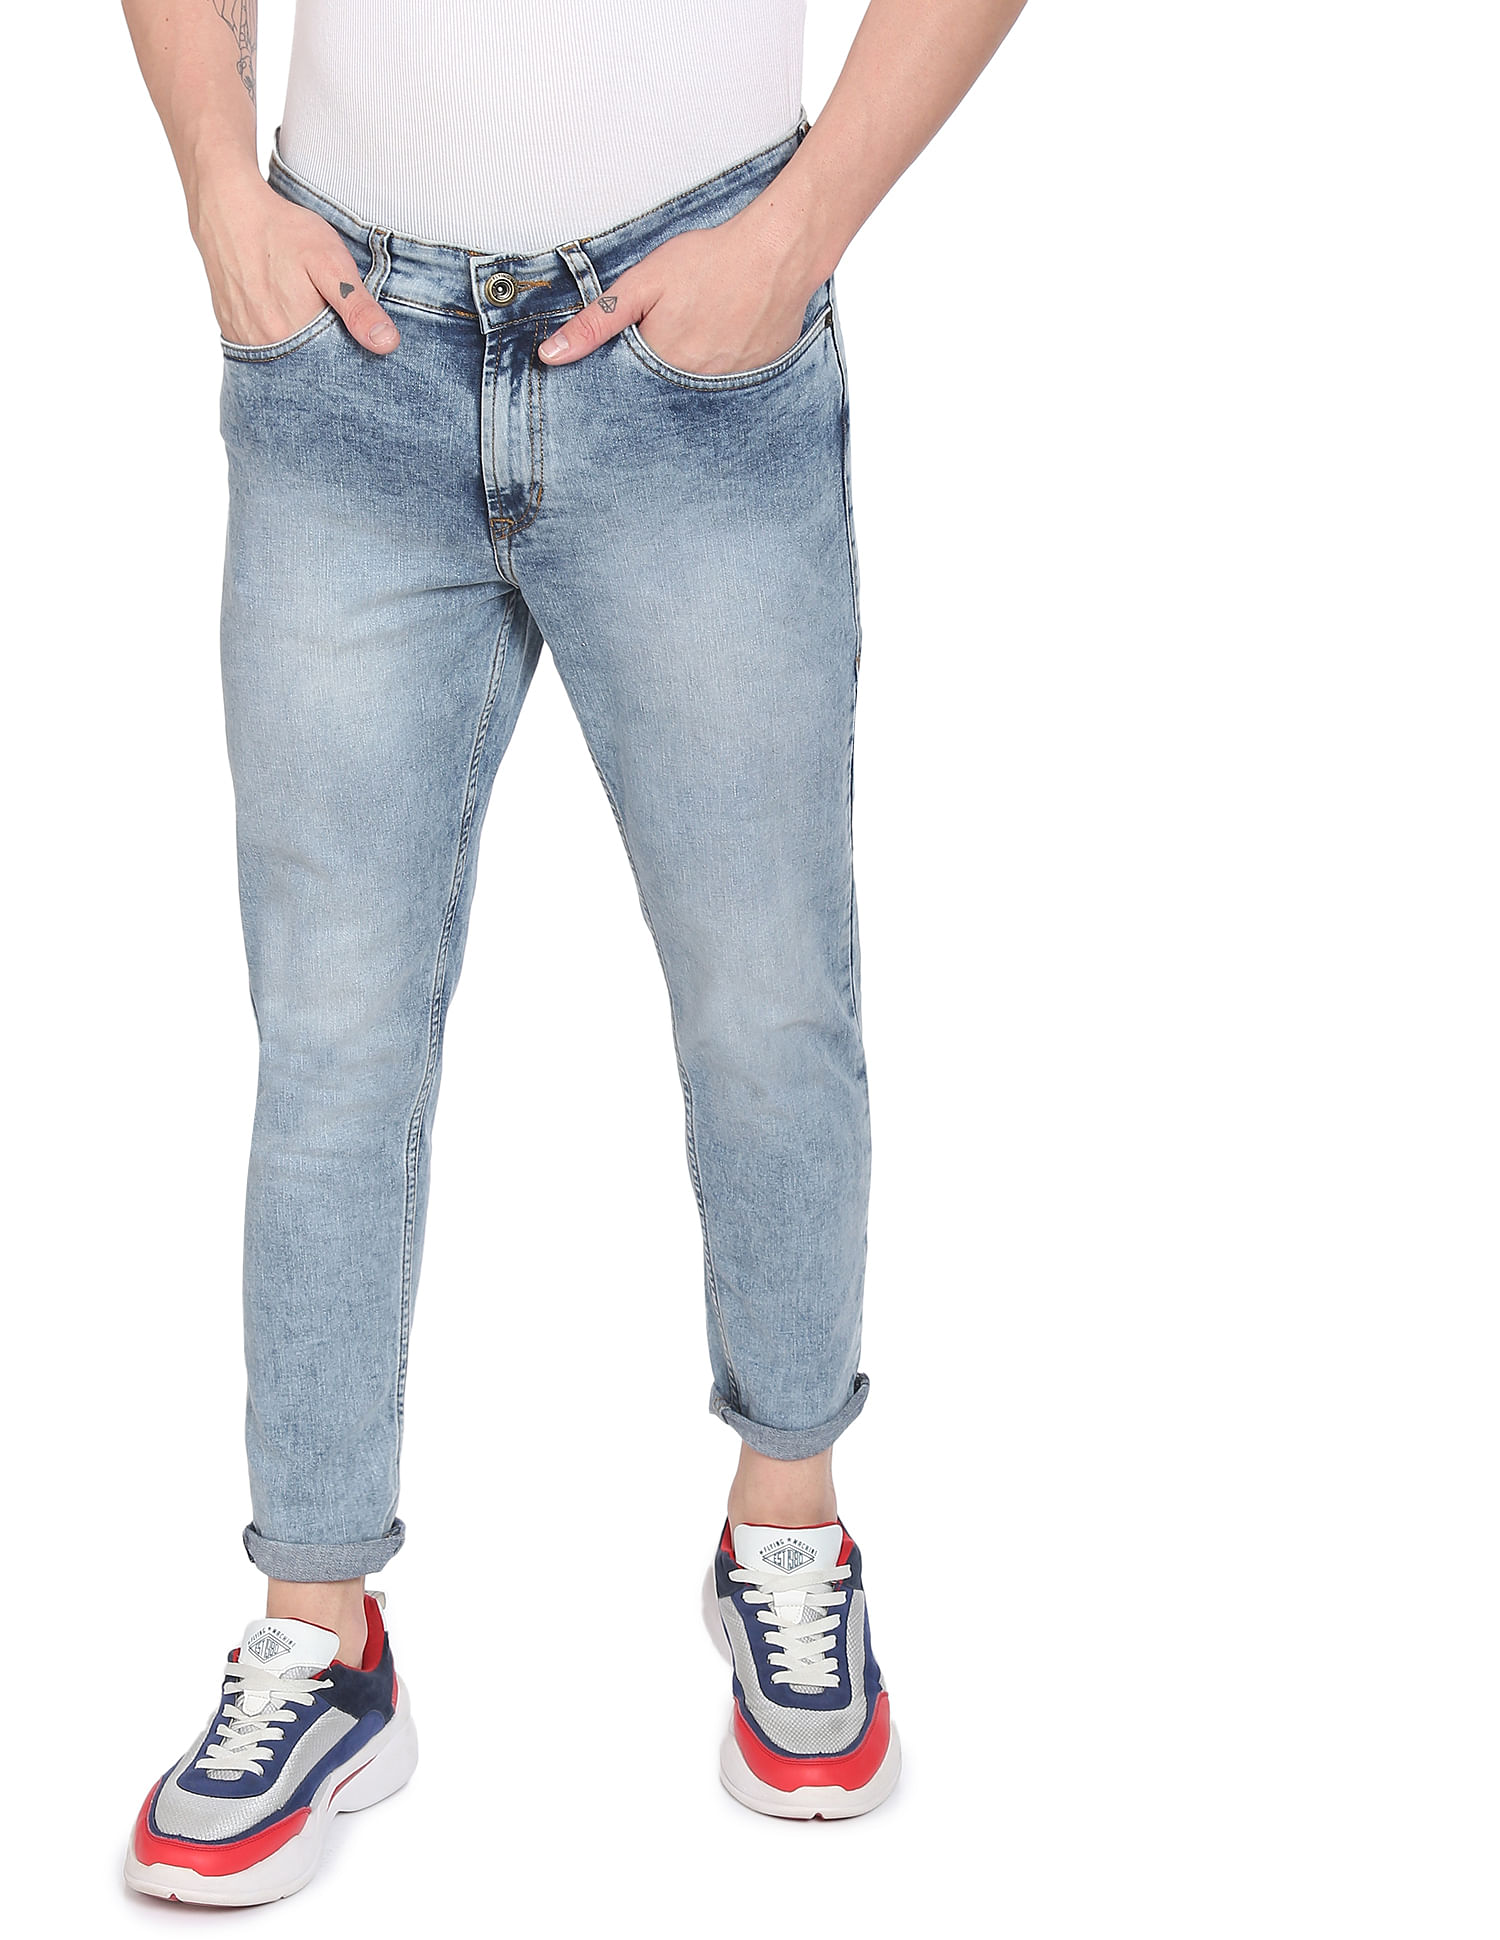 Denim Jeans — Stonewash - Inspected